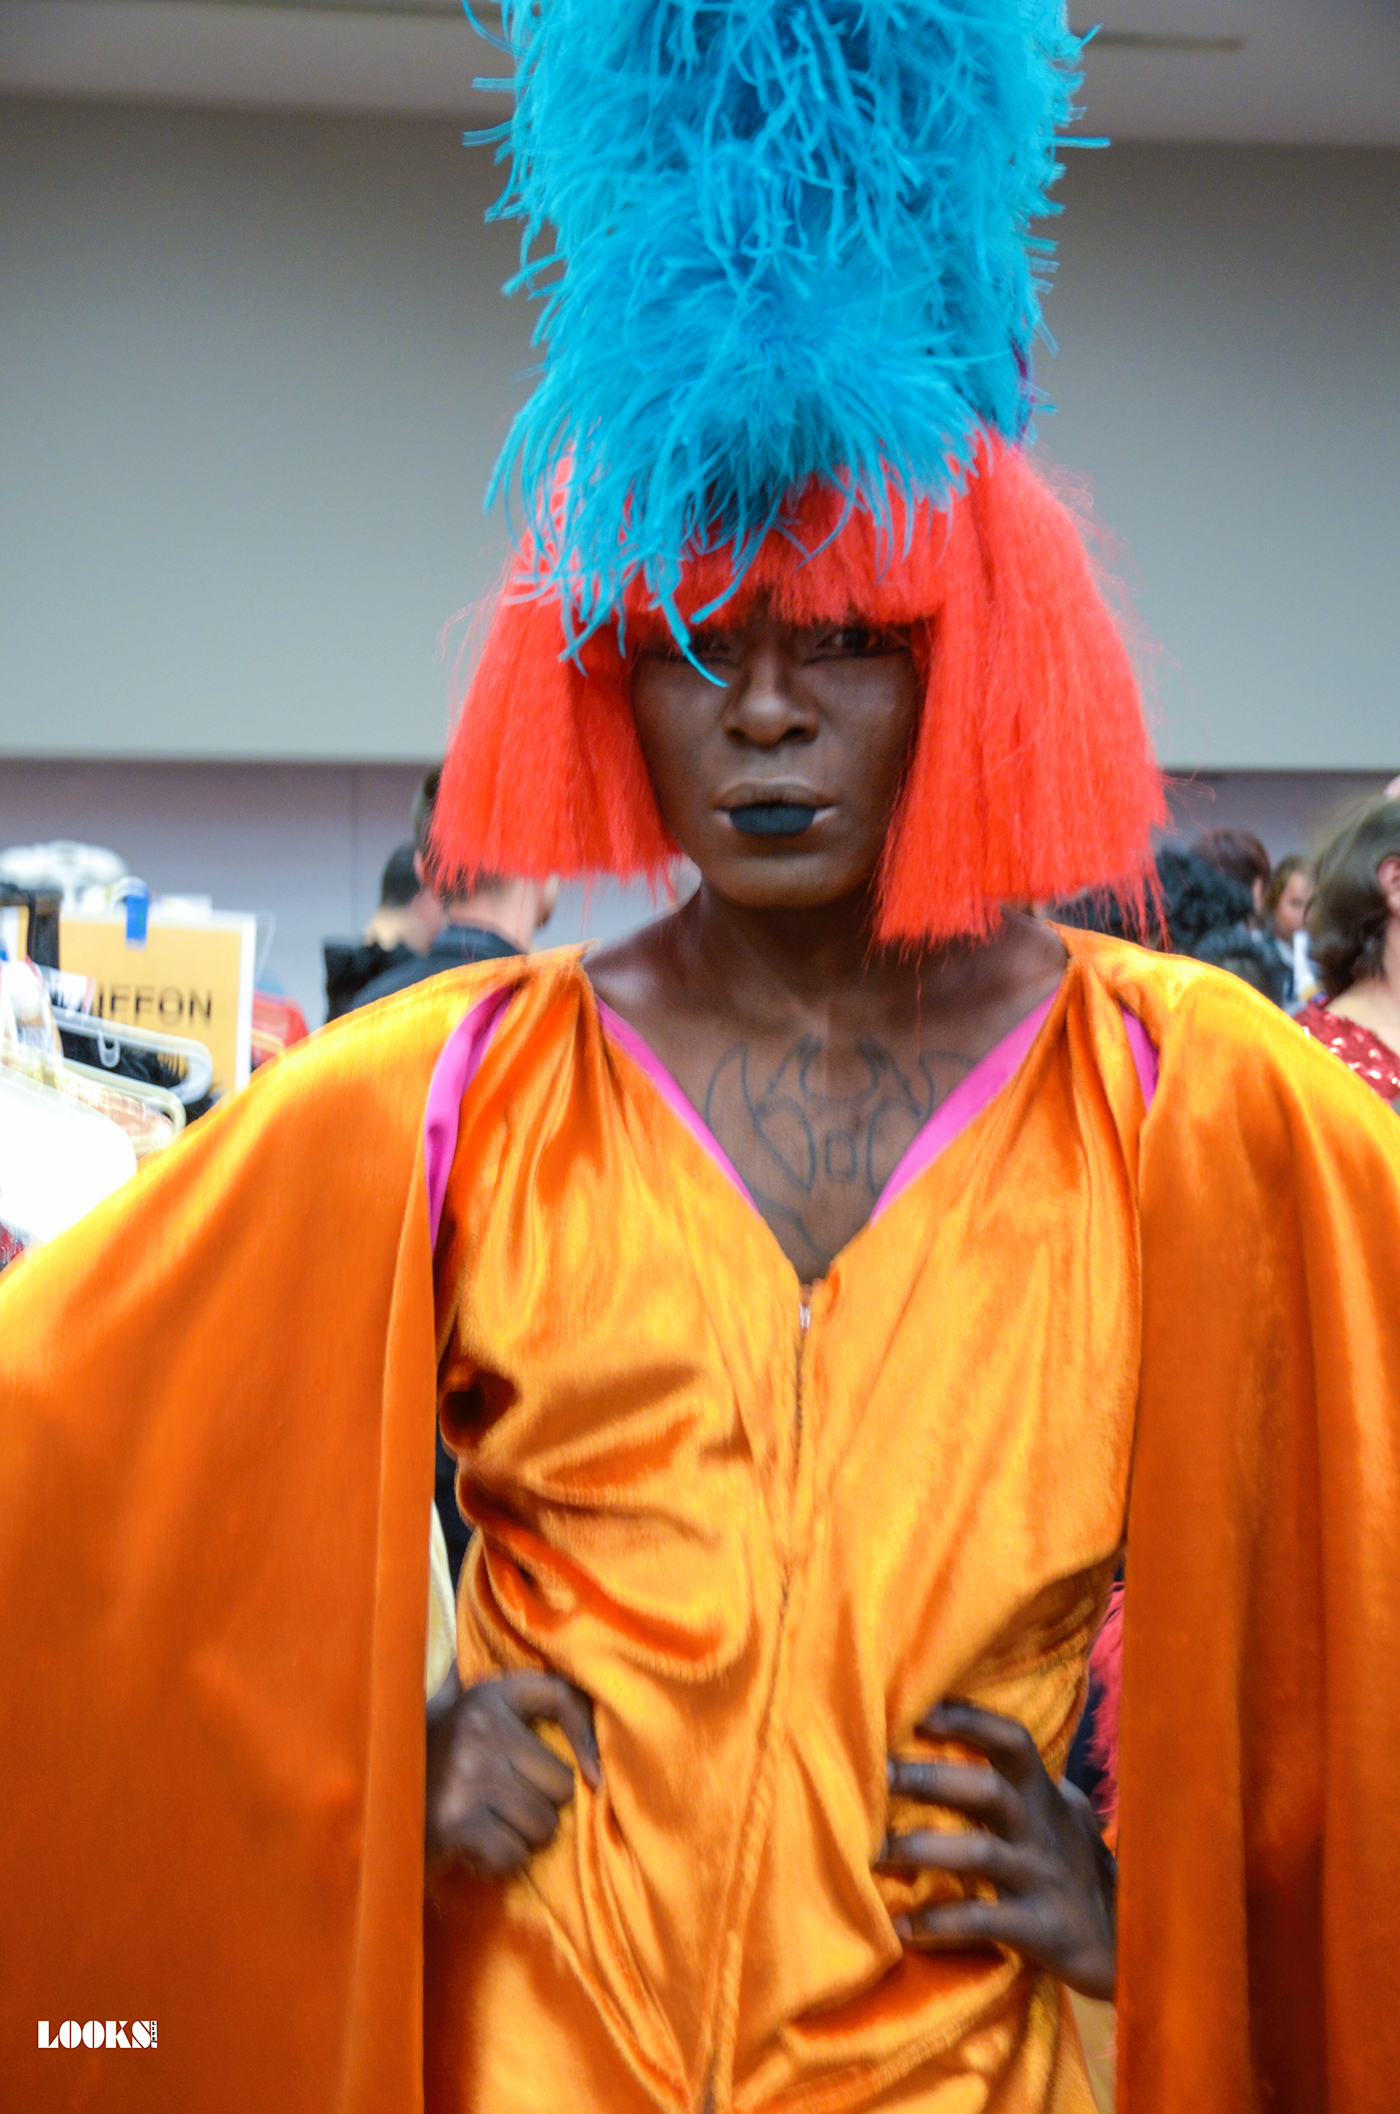 Fashion  Photography  runway juanita more Mr. David De Young Museum costume queer Drag modeling